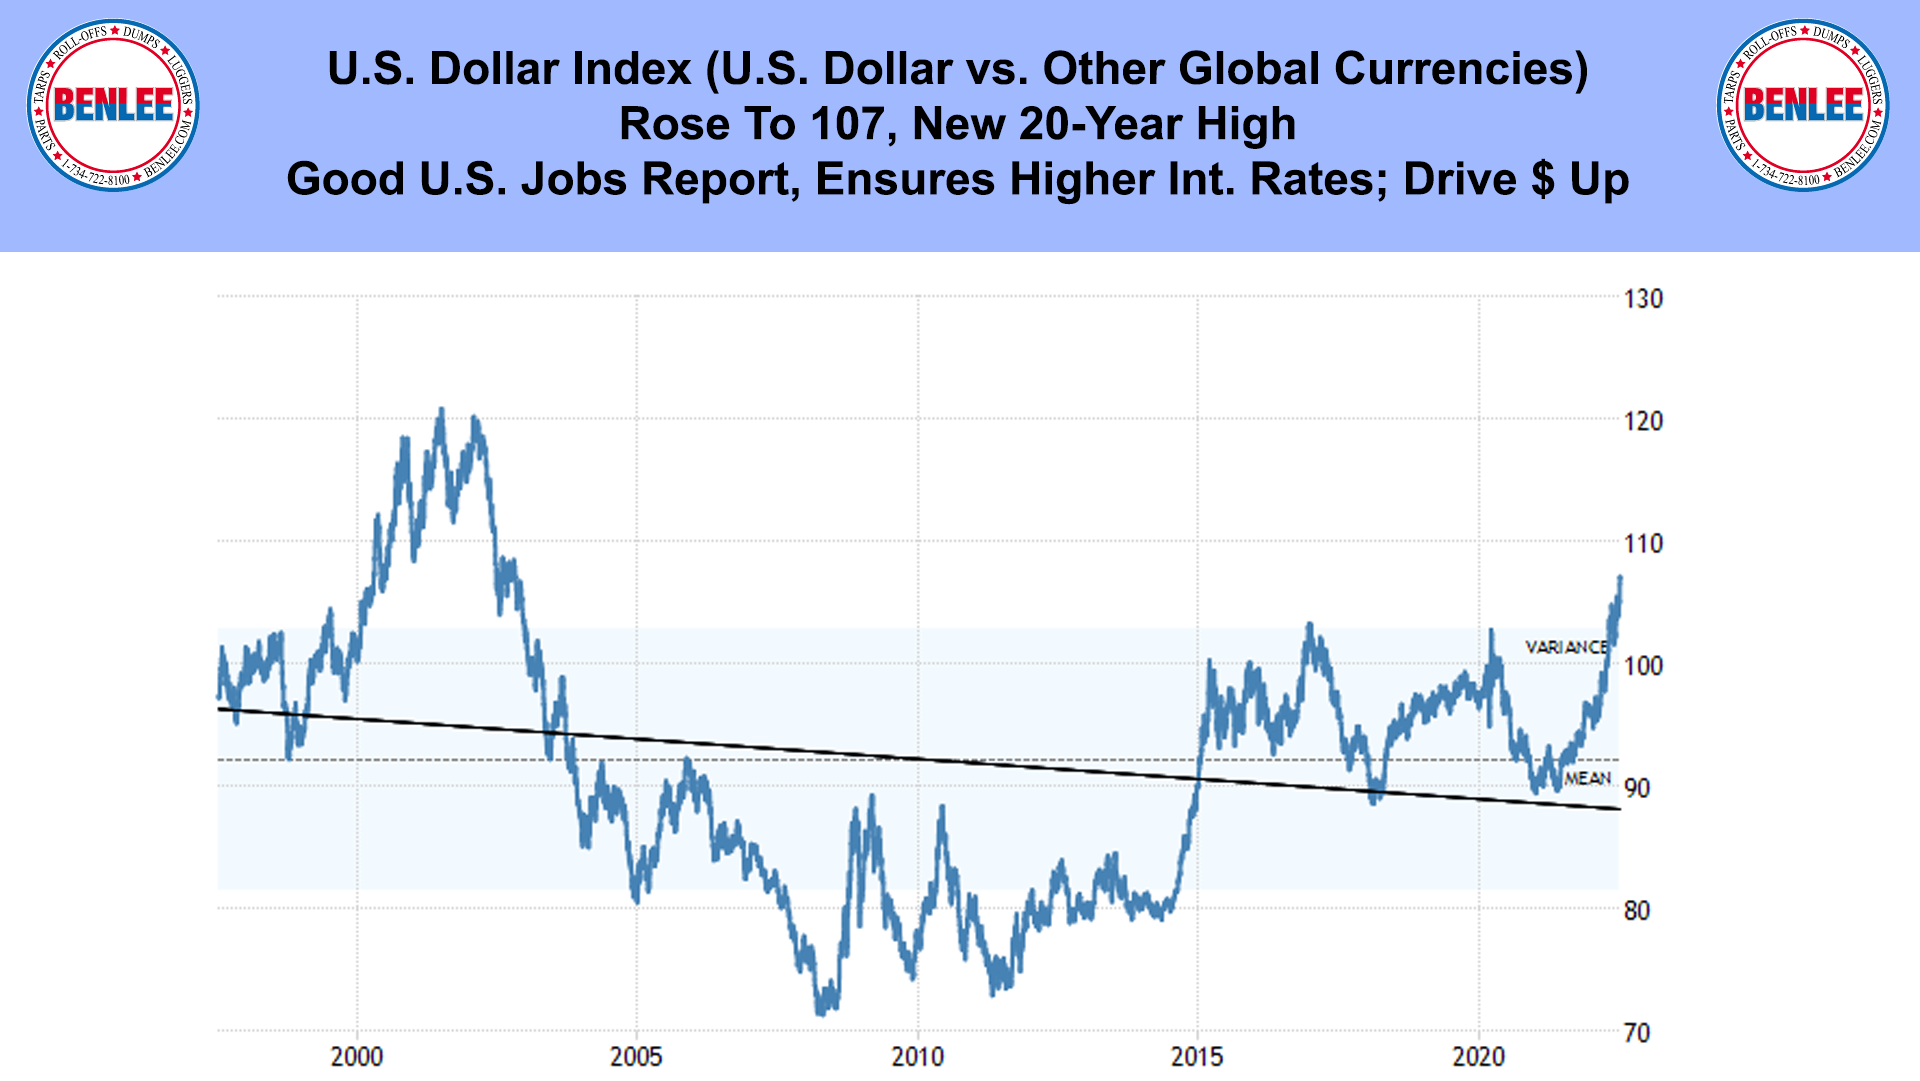 U.S. Dollar Index